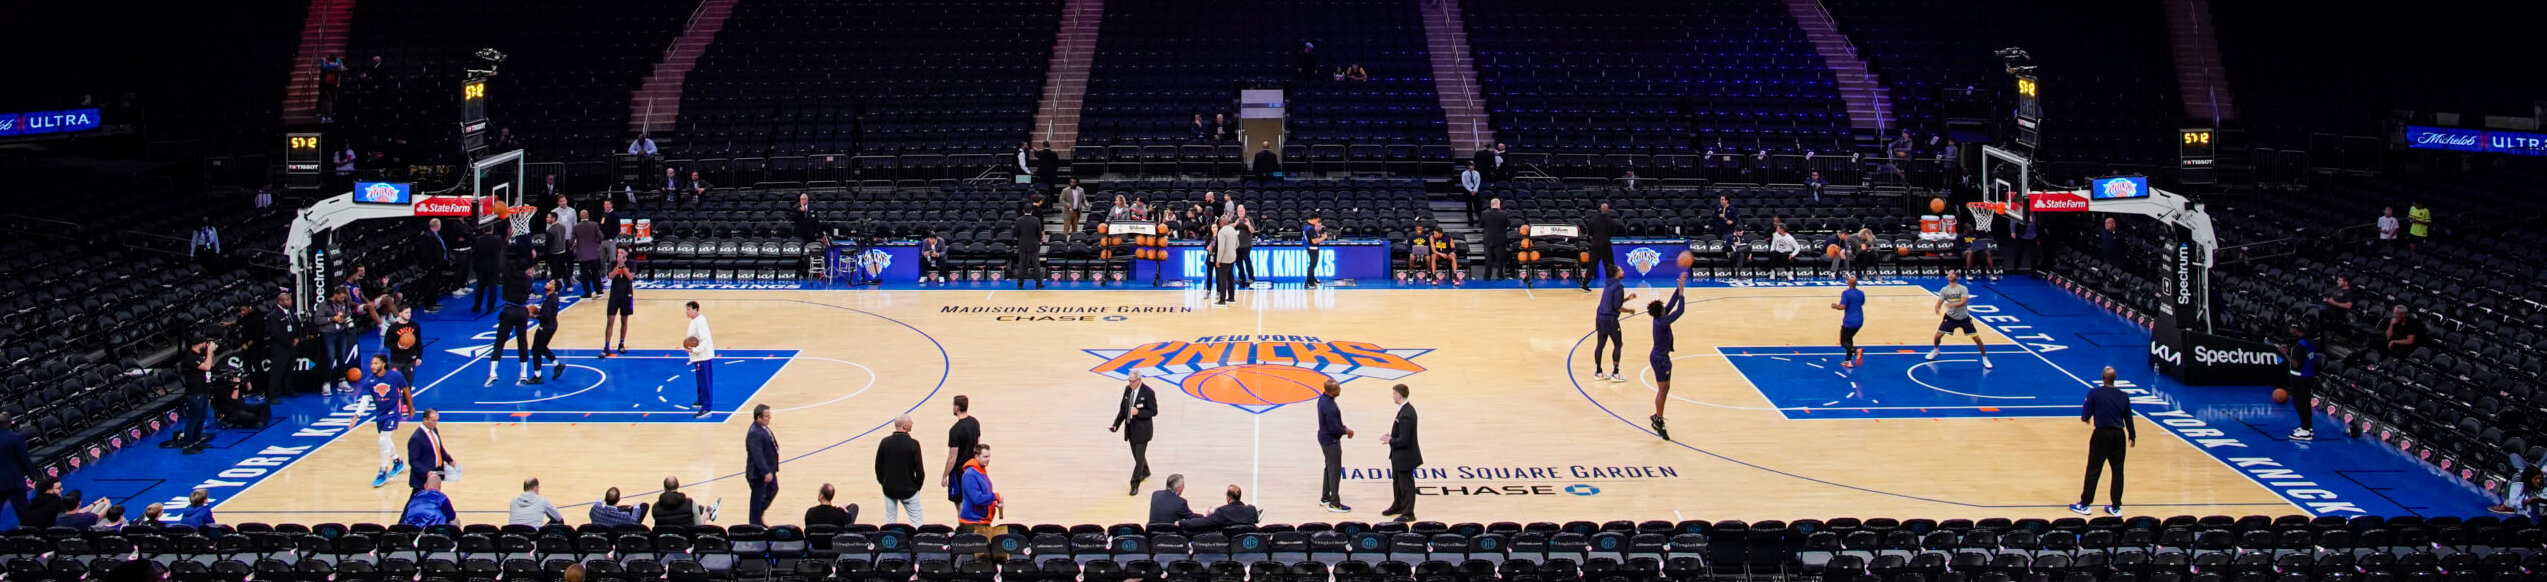 New York Knicks Sign Dylan Windler - The NBA G League